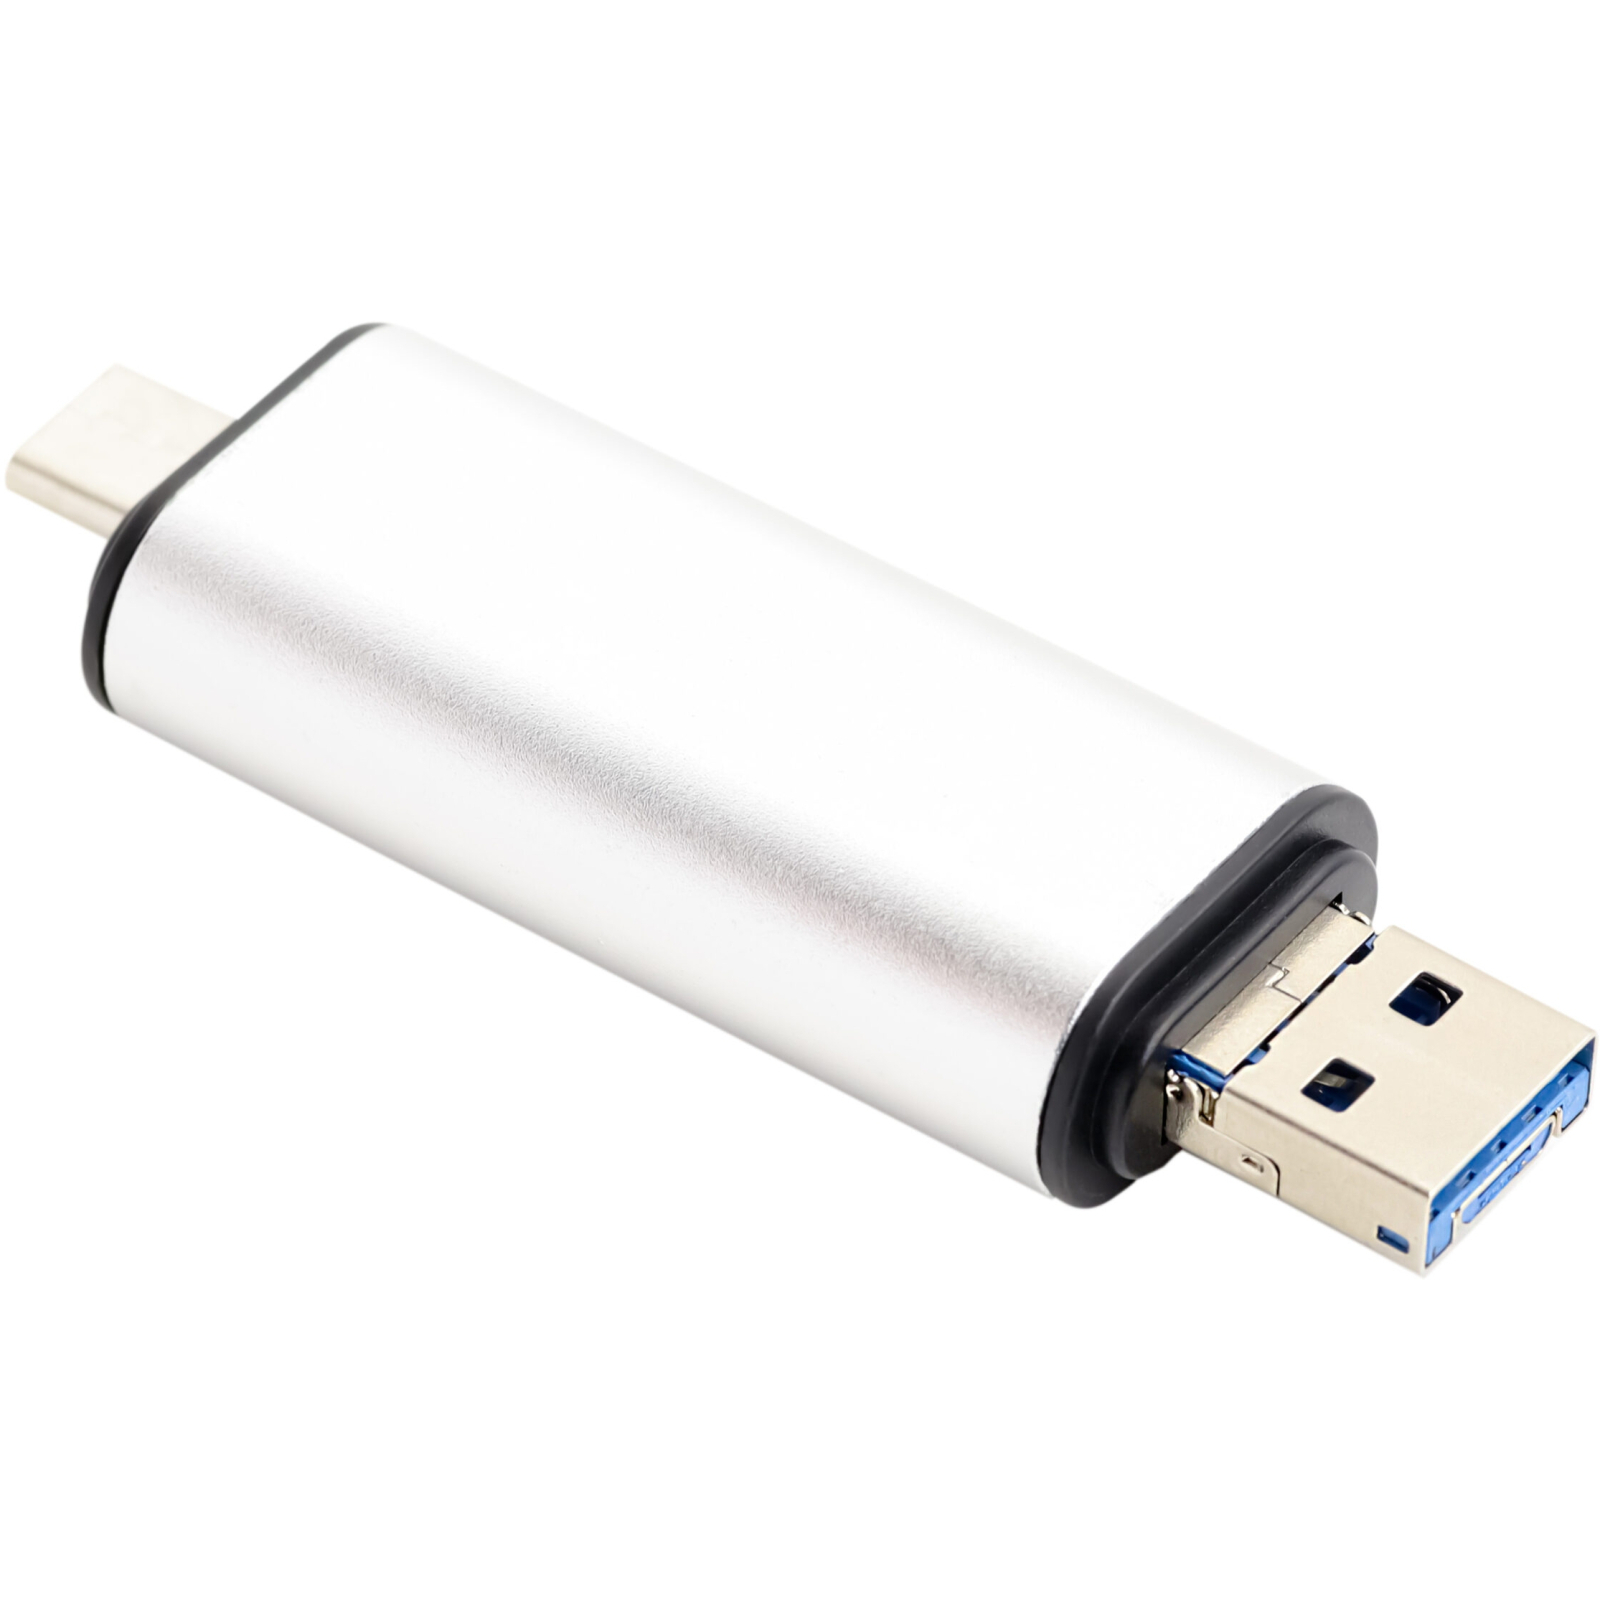 Концентратор XoKo AC-440 Type-C USB 3.0 and MicroUSB/SD Card Reader (XK-AС-440) изображение 3